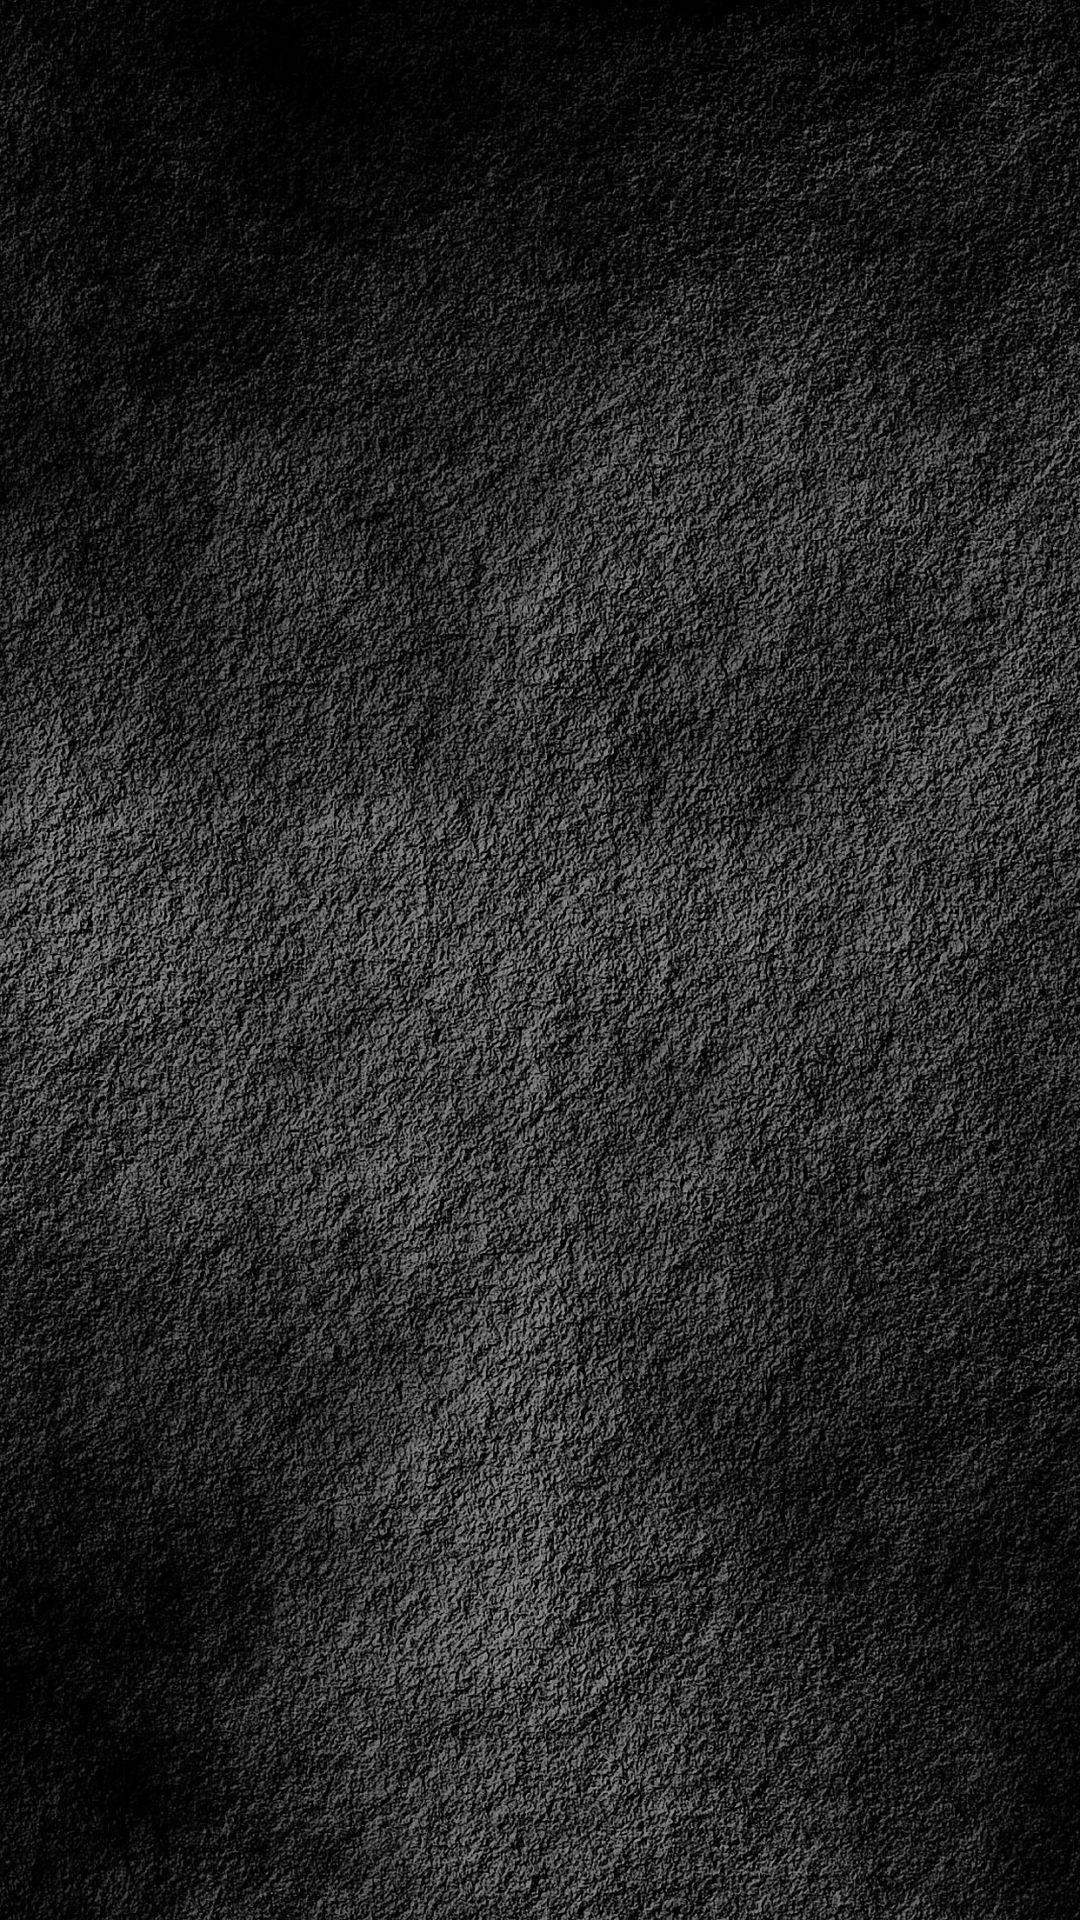 dark abstract iphone 6 wallpaper HD. Wallpaper